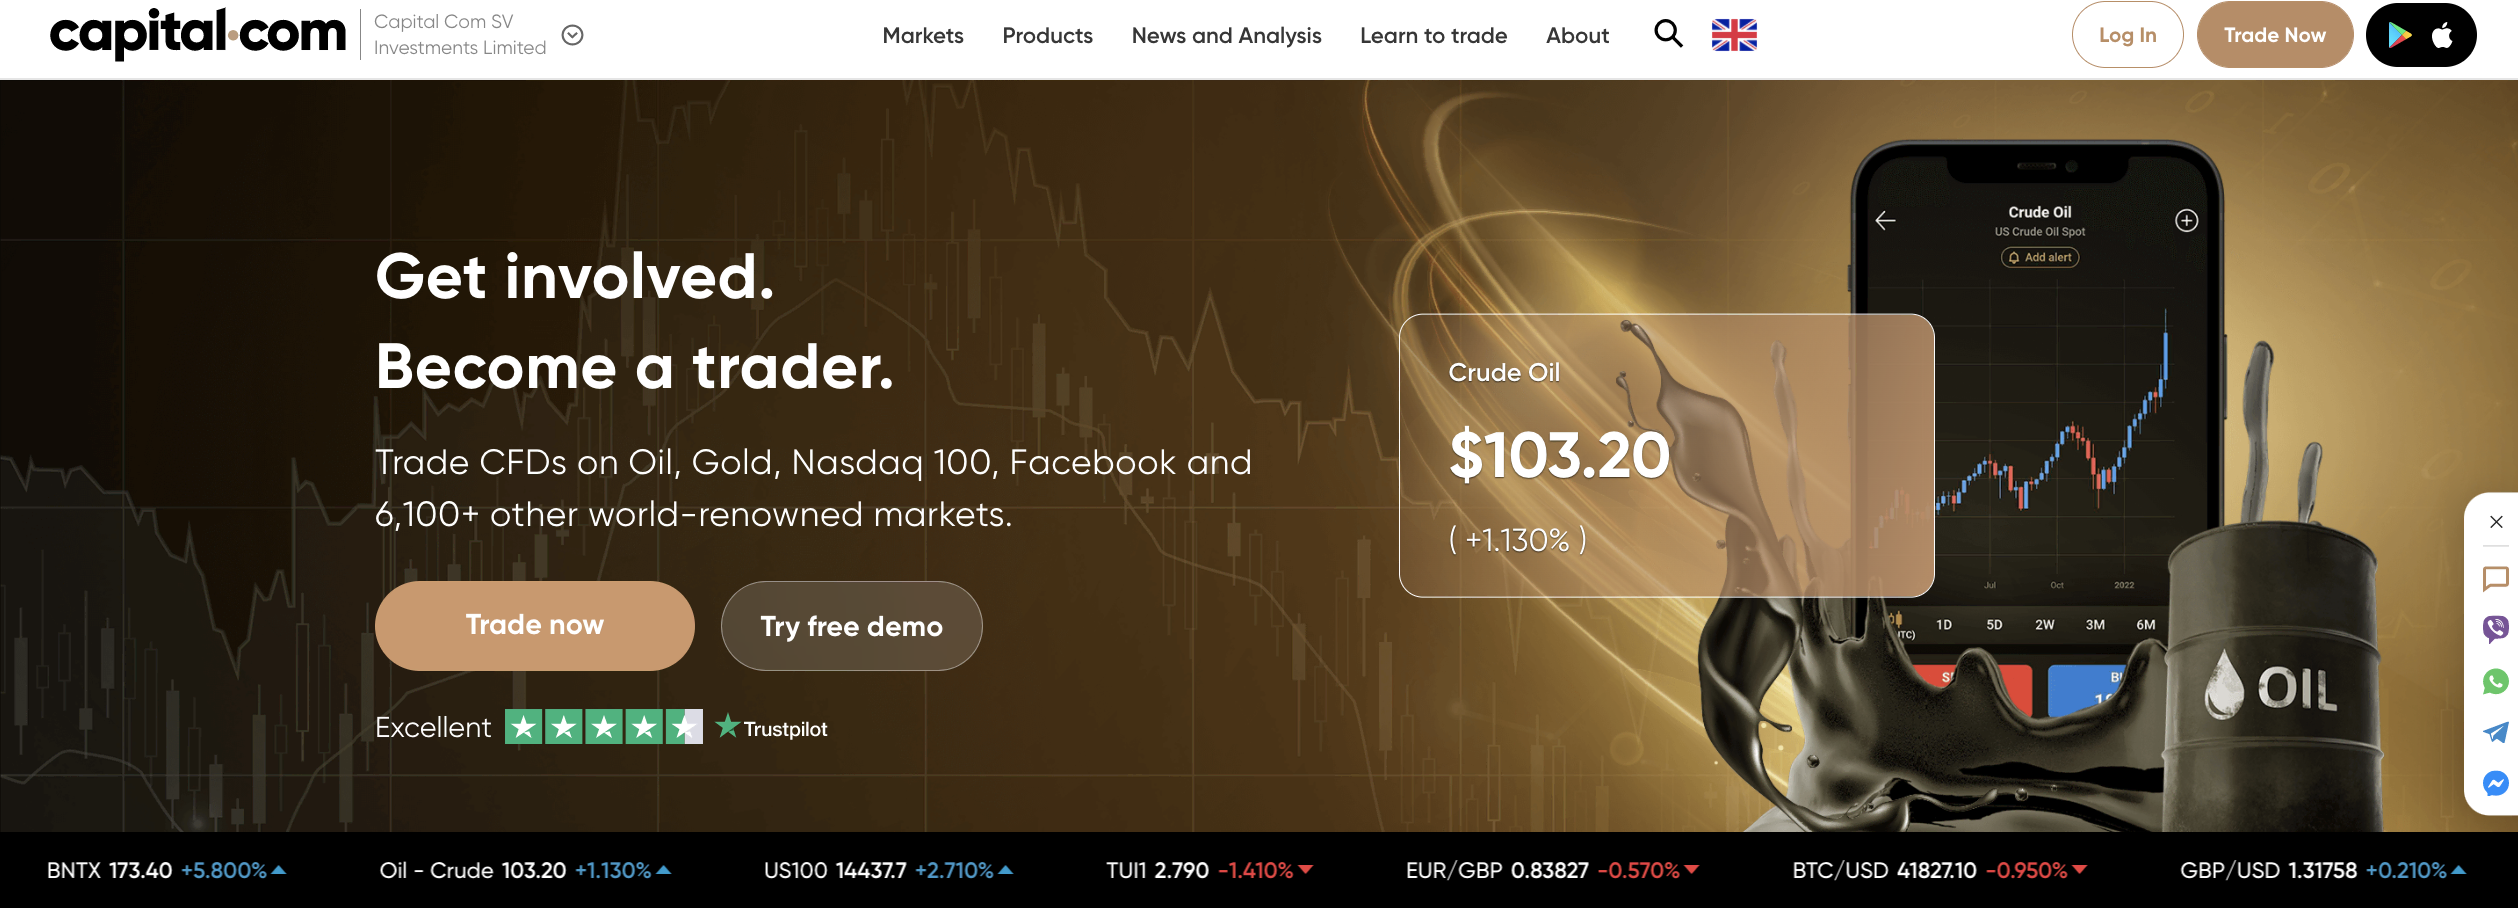 Oficjalna strona internetowa brokera forex Capital.com